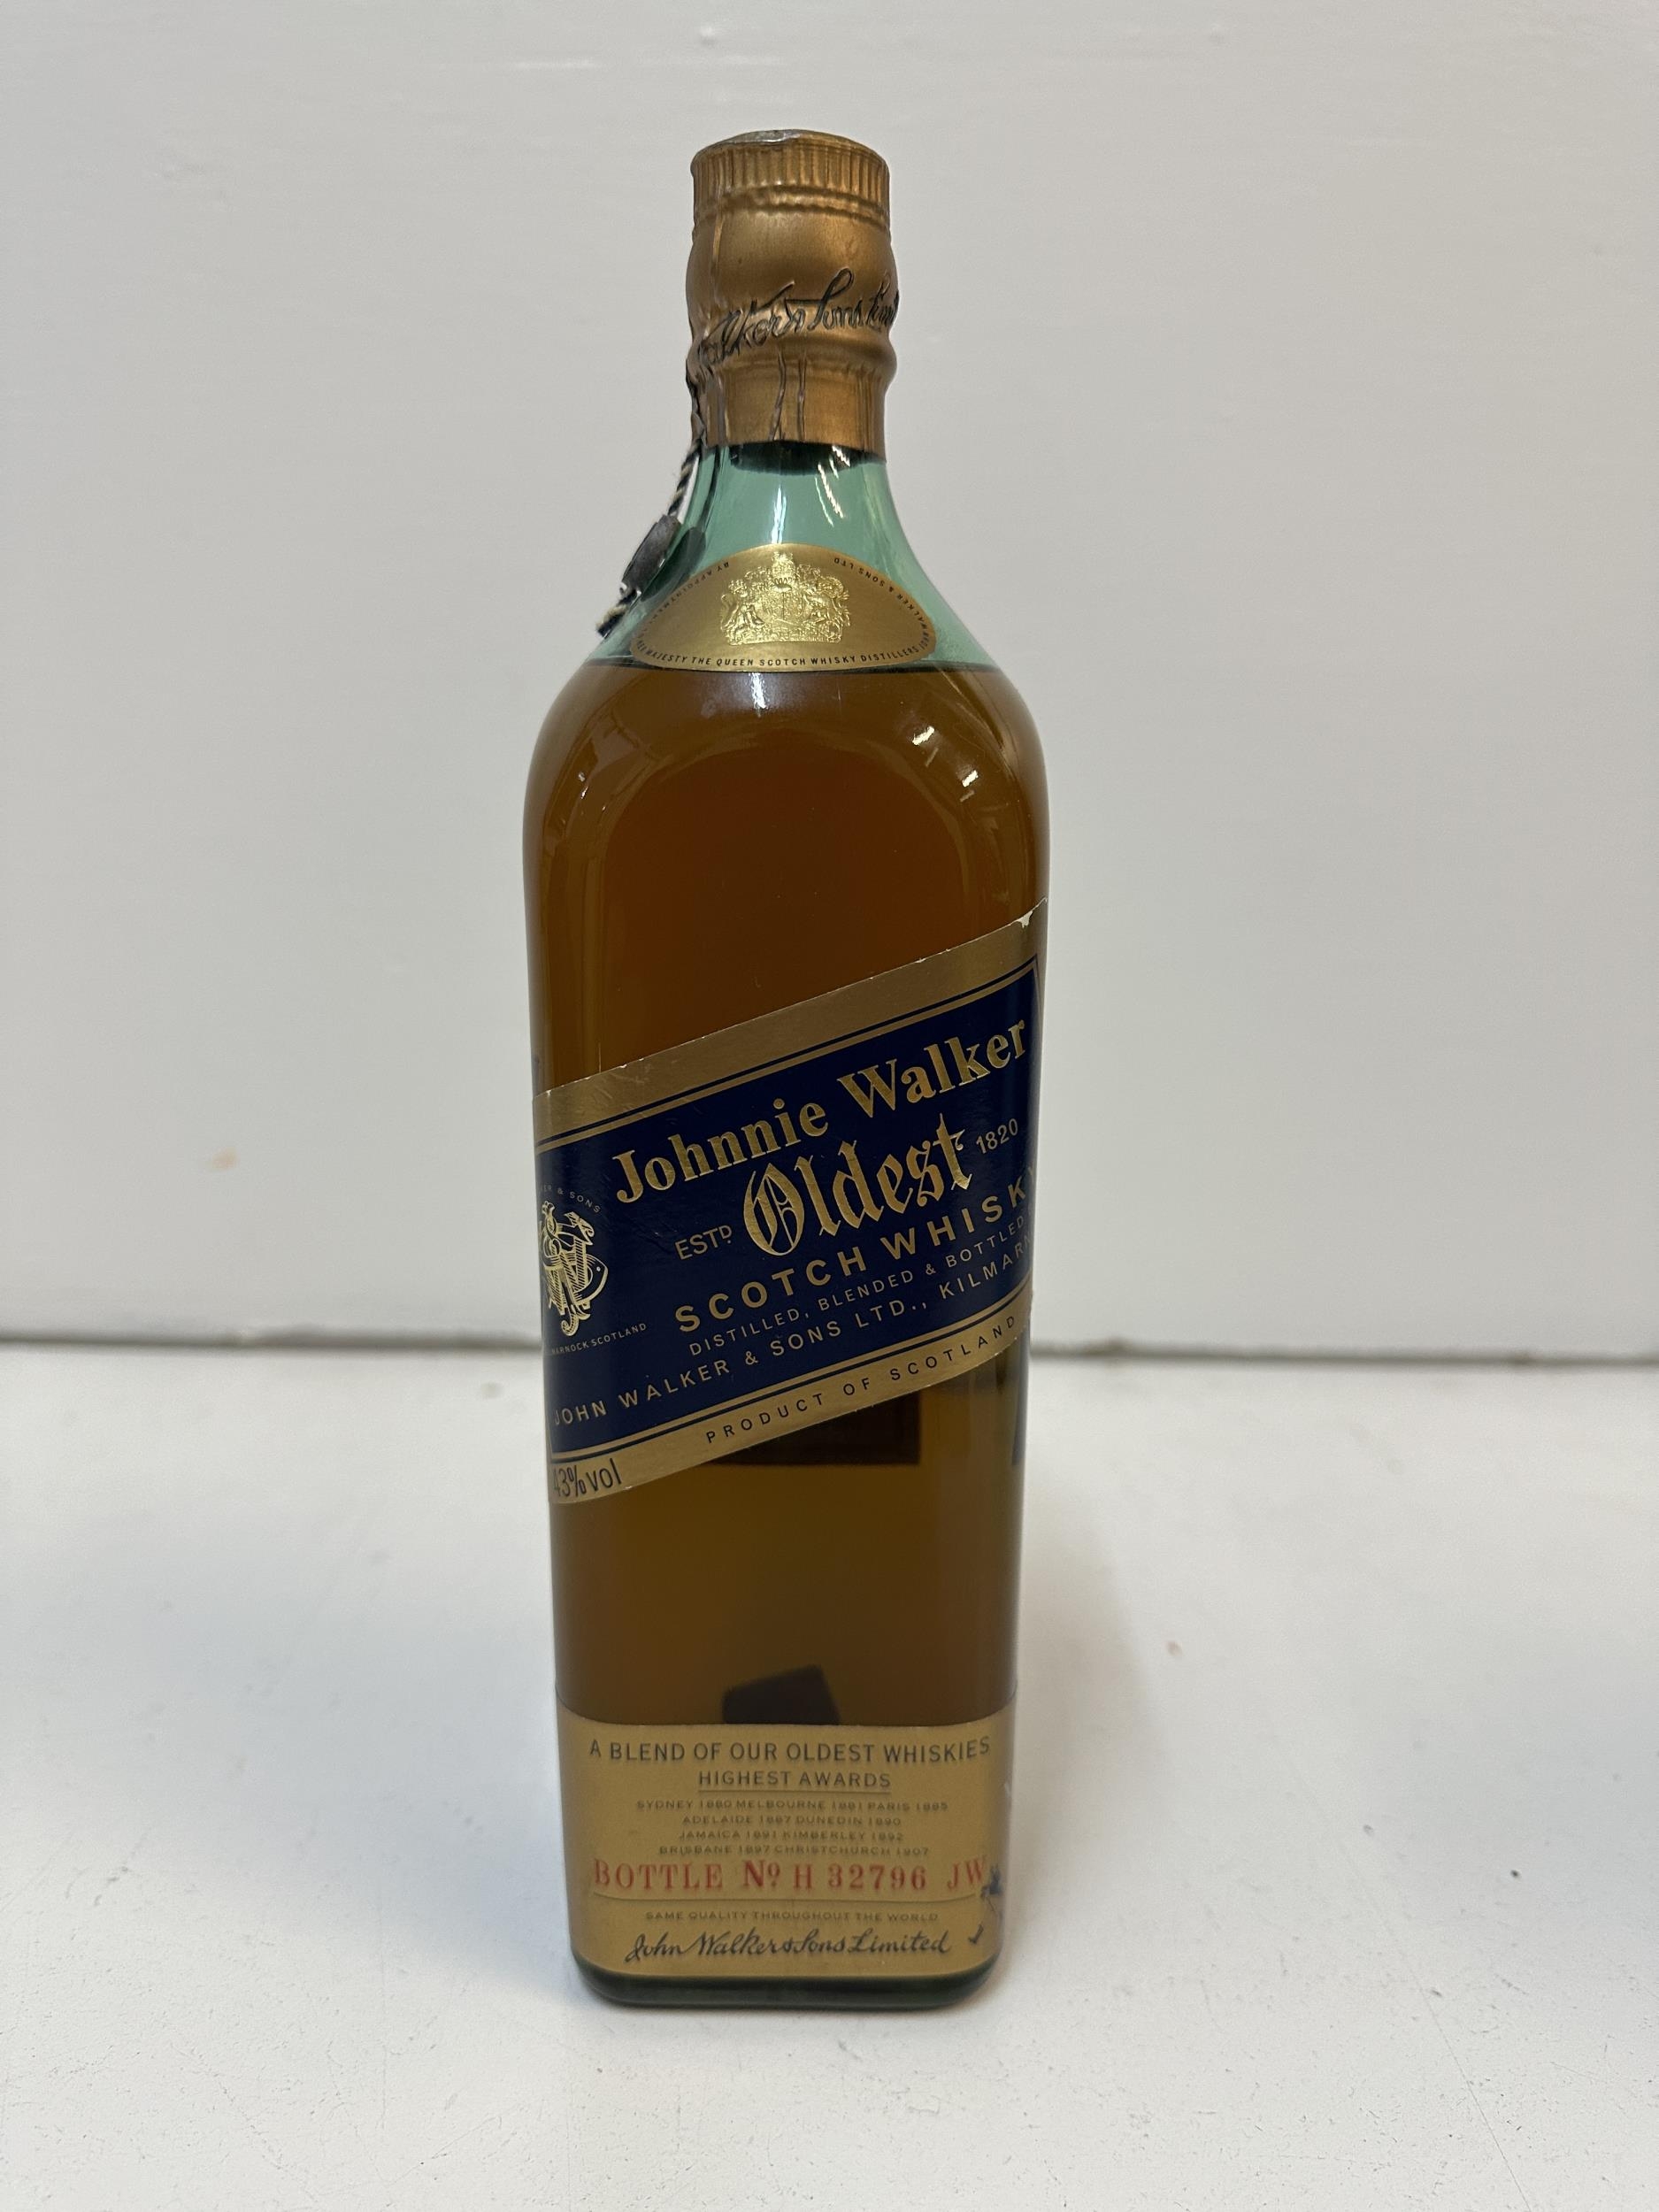 Johnnie Walker Oldest 1820 Scotch whisky, bottle no H32796 JW